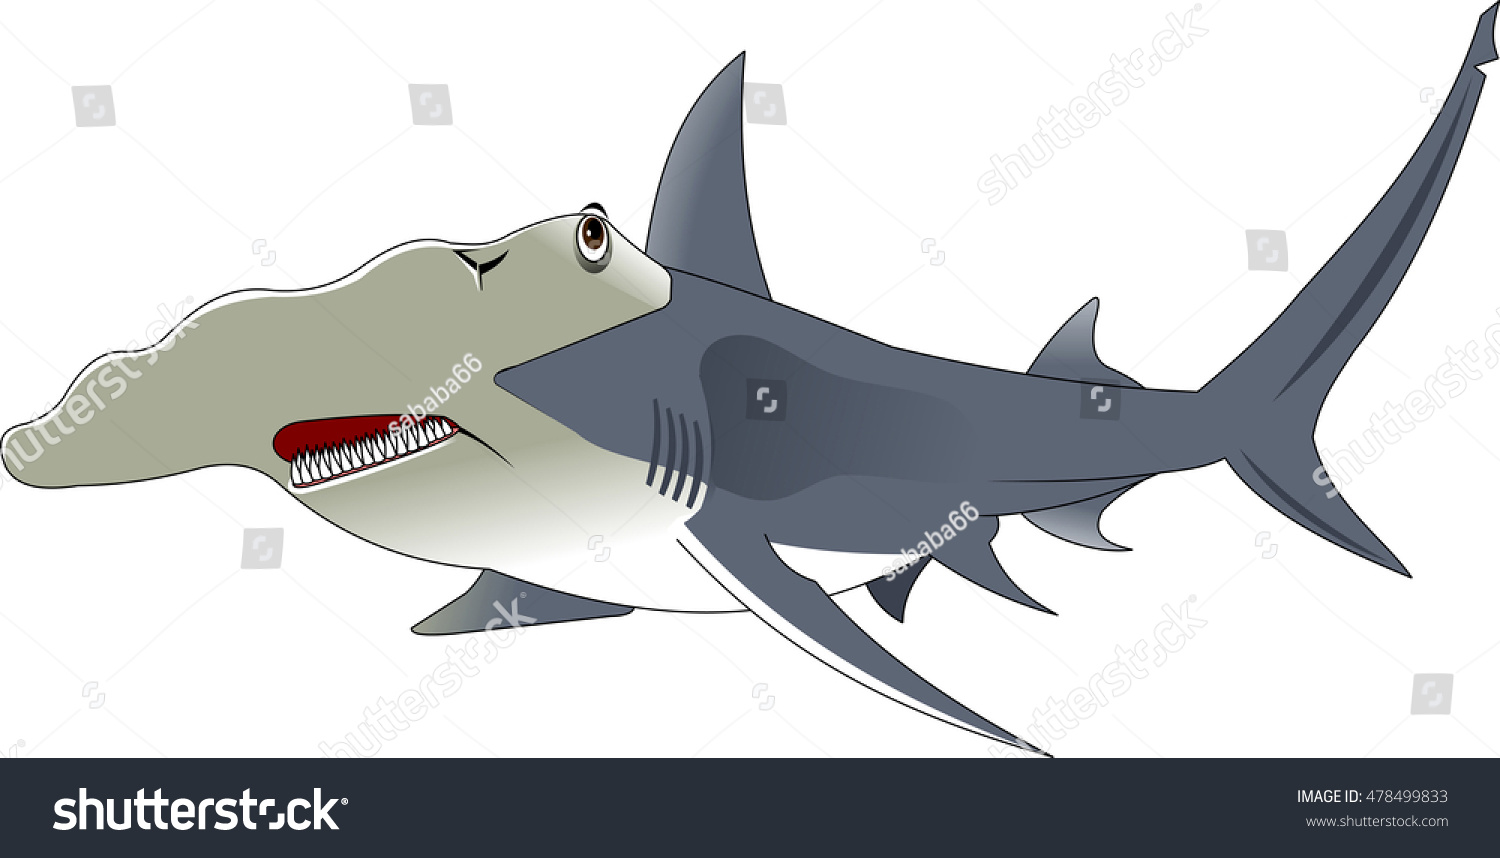 Vector Cartoon - Hammerhead Shark - 478499833 : Shutterstock